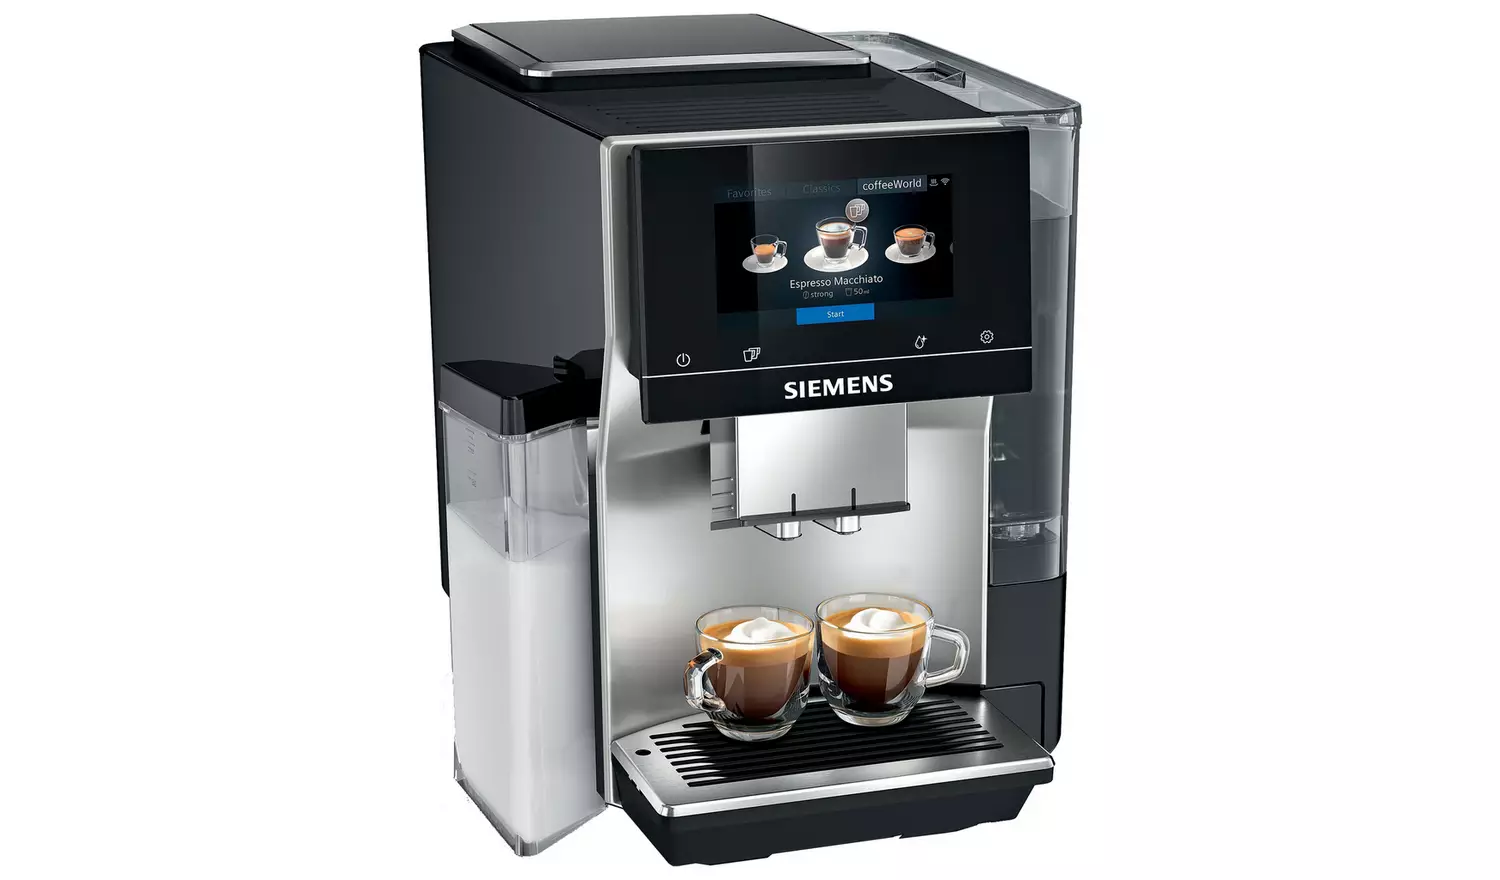 TQ703GB7 SIEMENS Freestanding Coffee Machine - EQ700 Bean to Cup Coffee Machine - Silver/Black